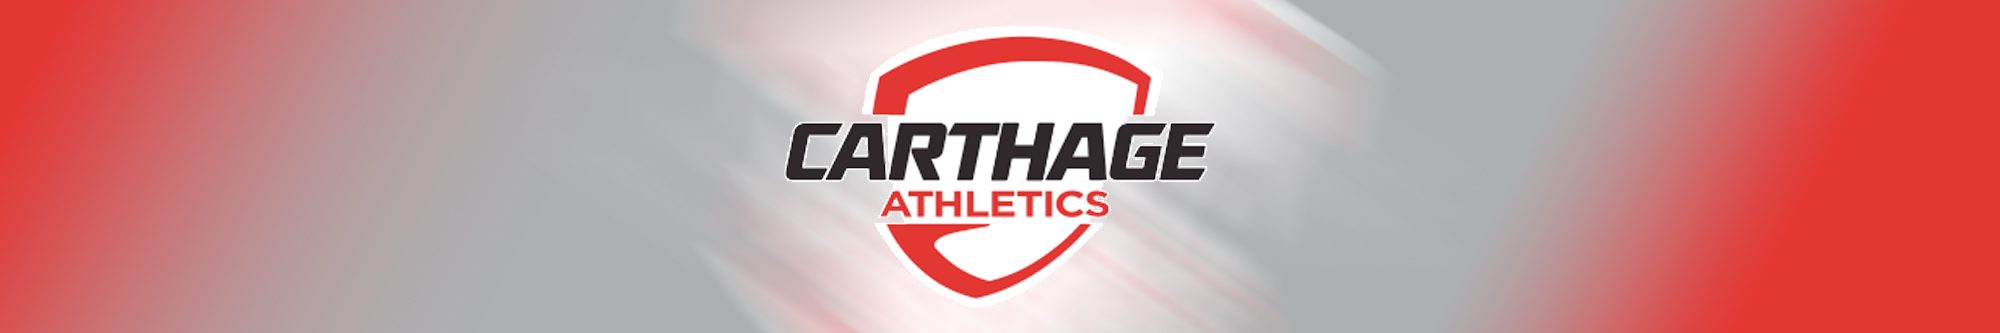 carthage-lacrosse-equipment-store